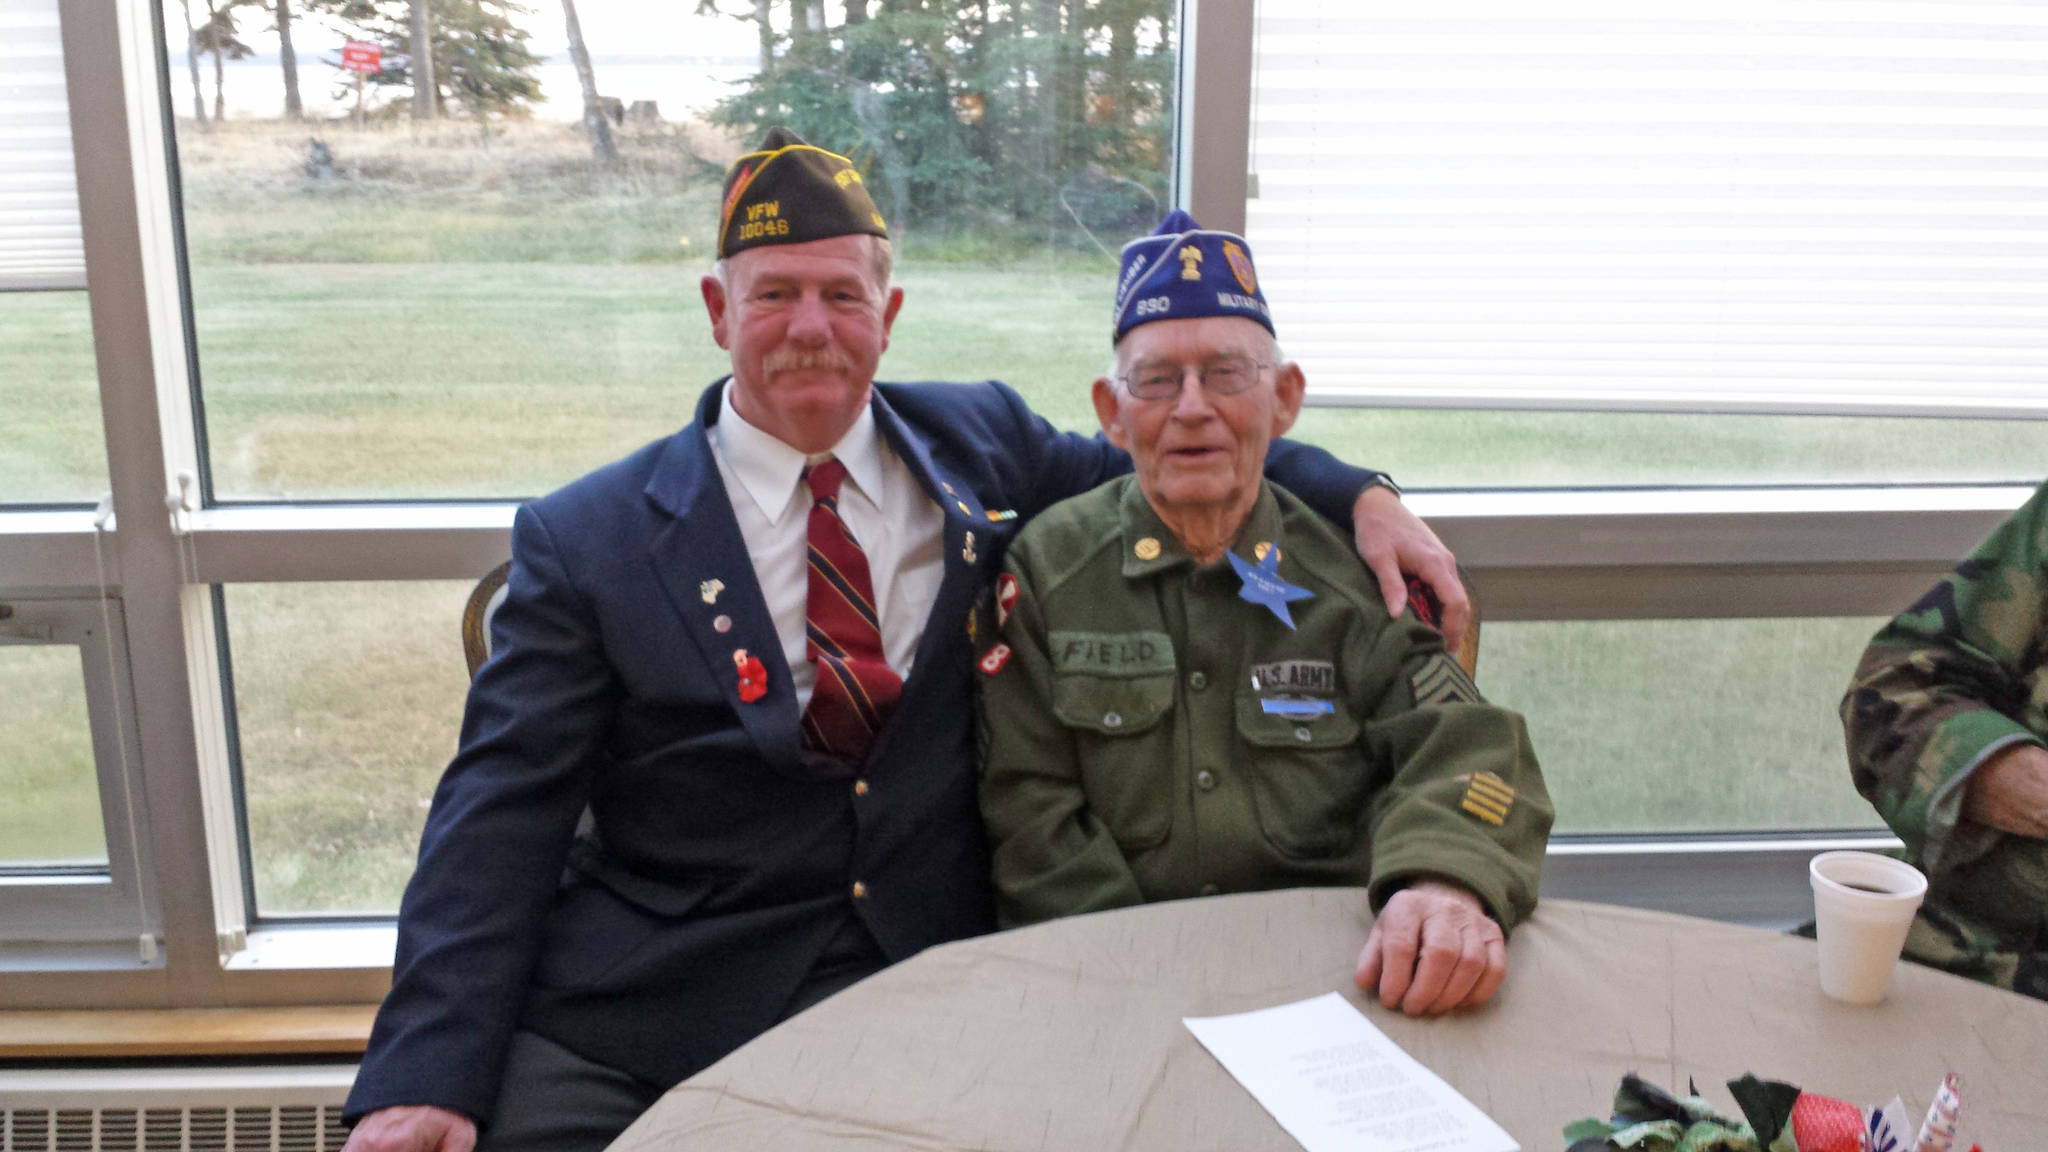 Veteran marks 70-year milestone